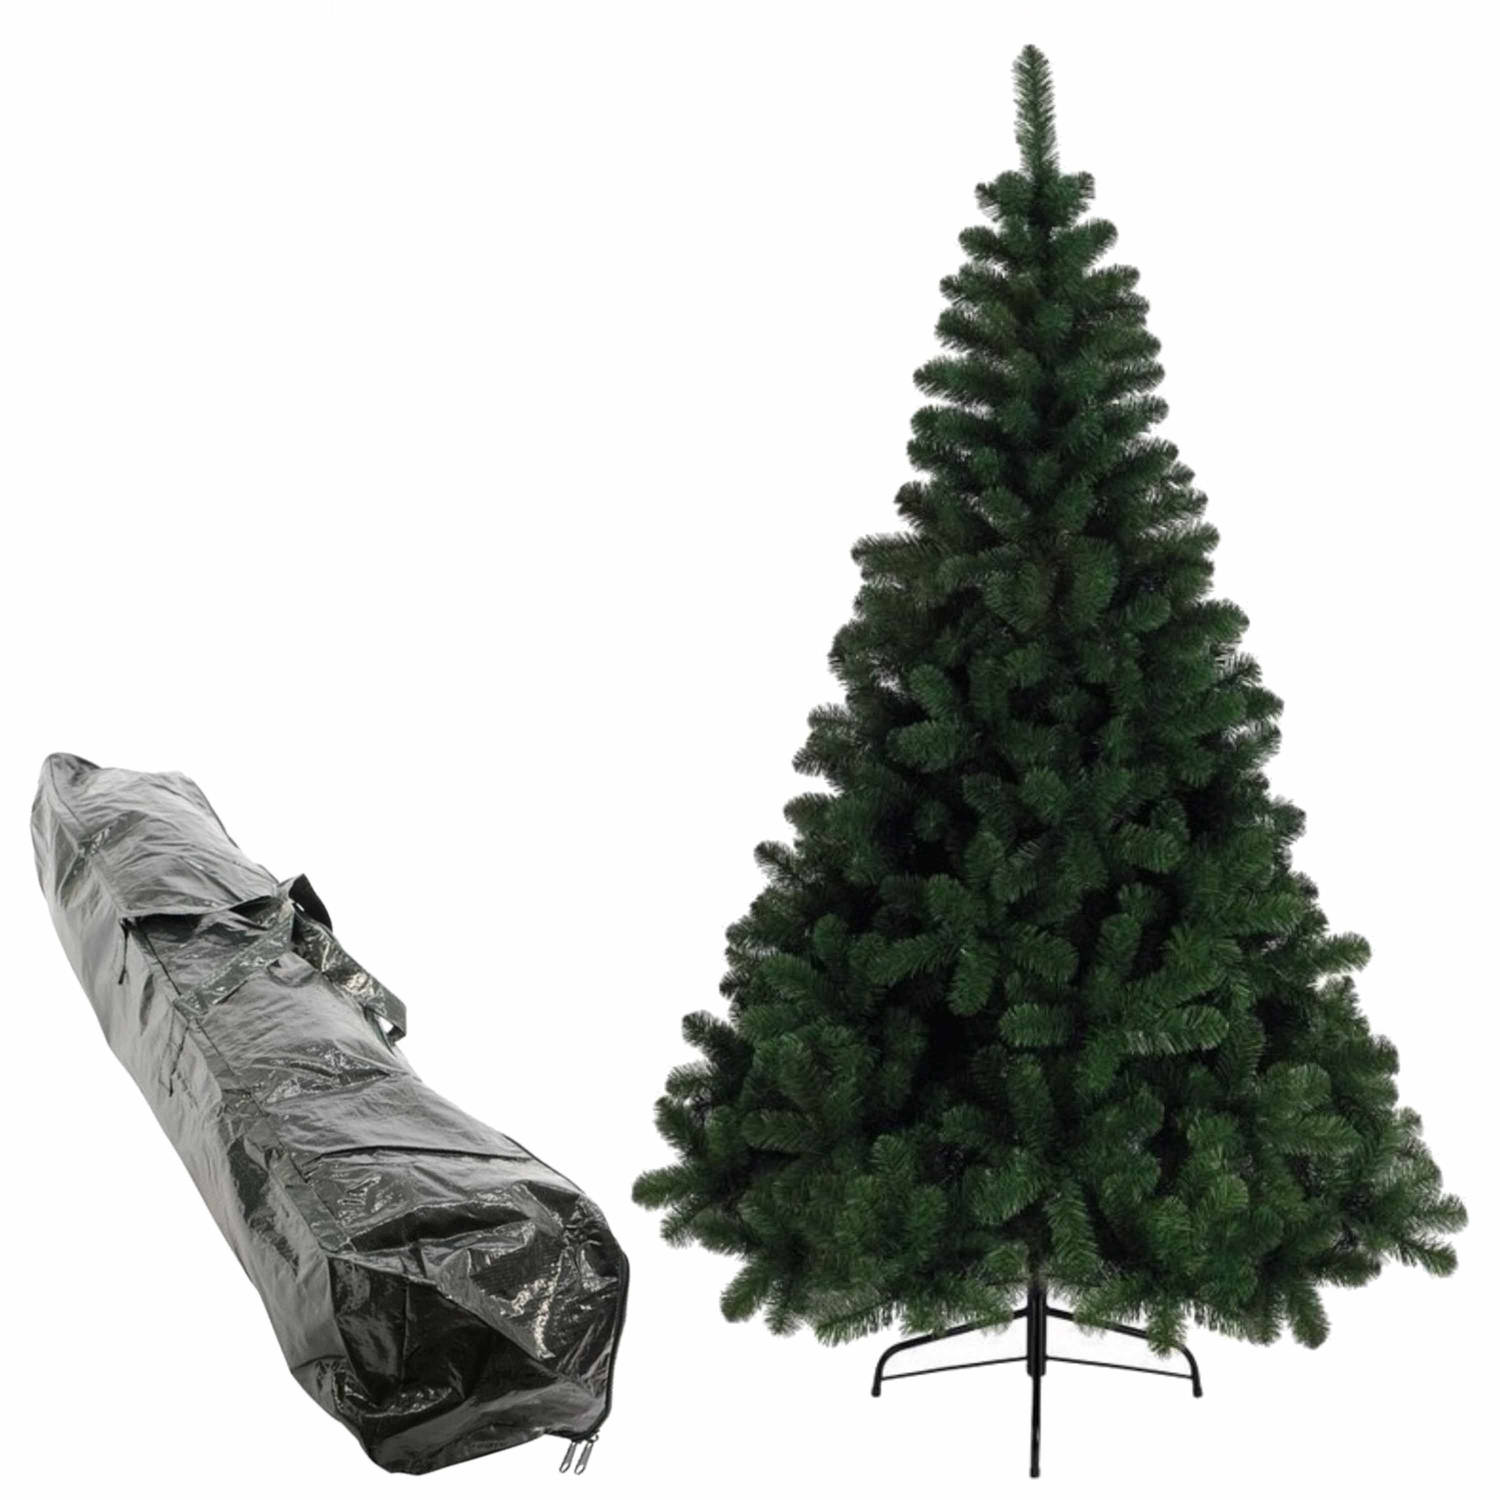 Prooi Getuigen Defilé Kunst kerstboom Imperial Pine 120 cm inclusief opbergzak - Kunstkerstboom |  Blokker